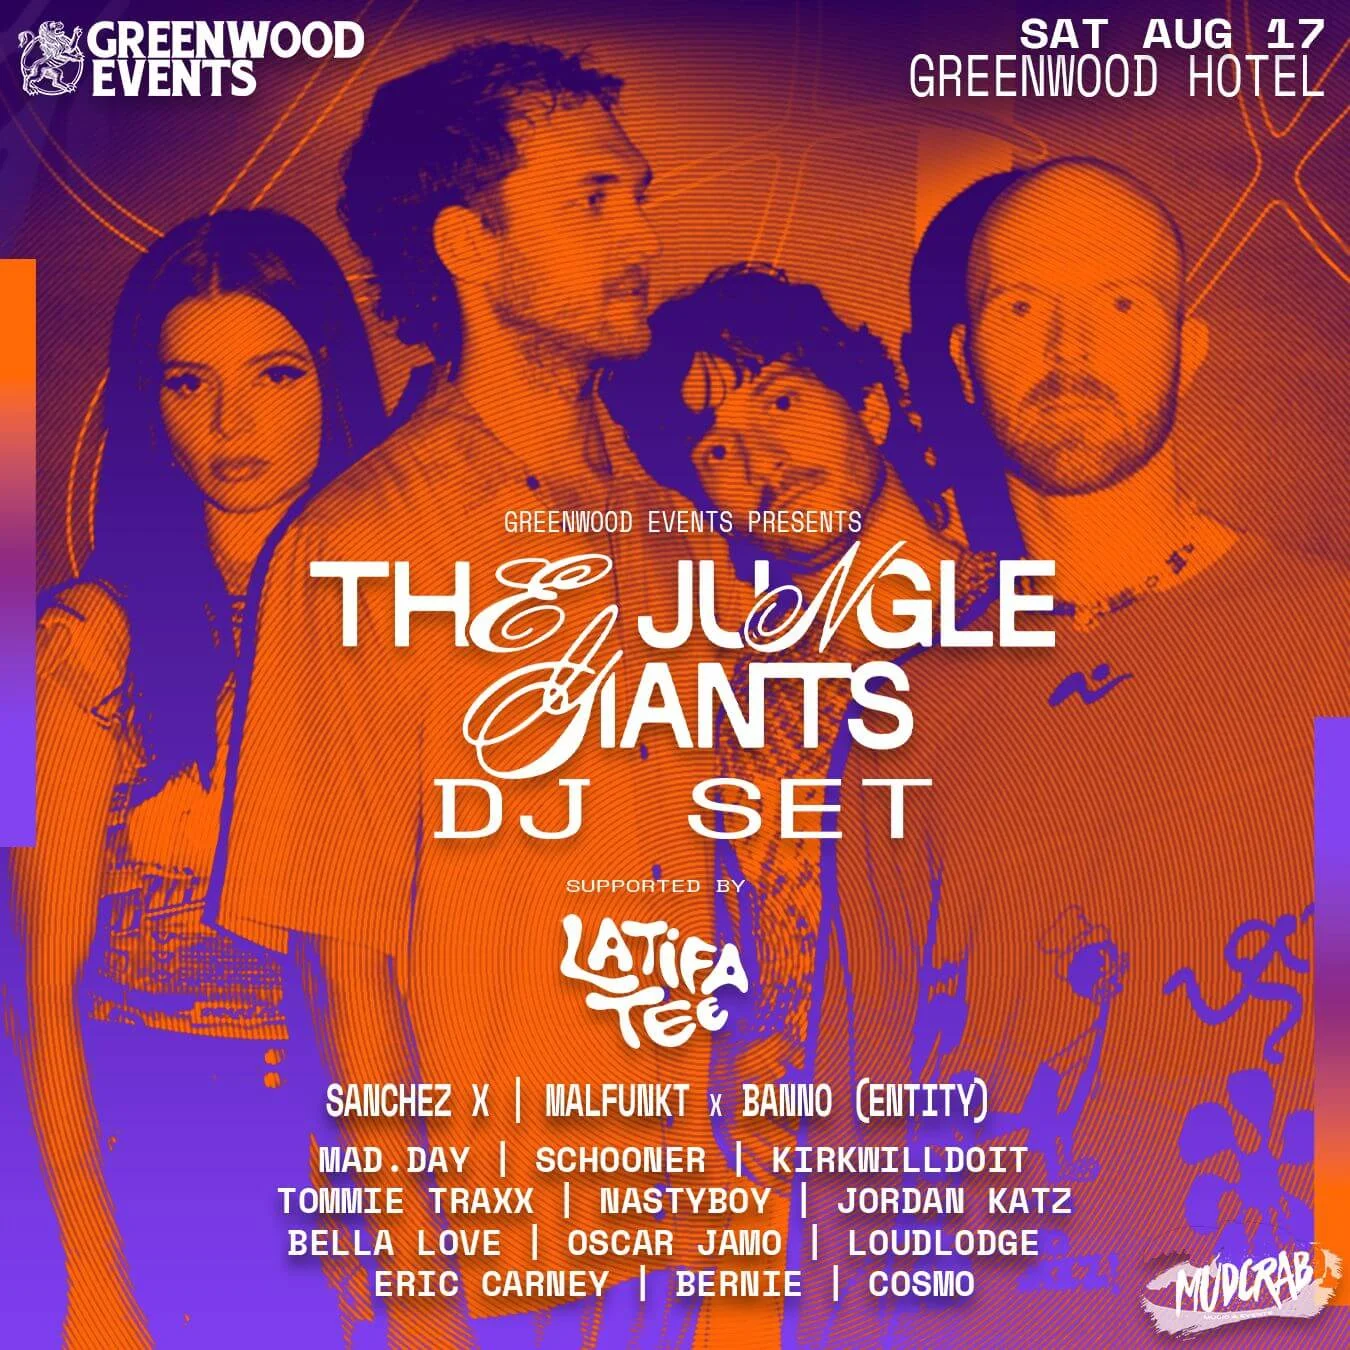 Jungle Giants DJ Set at Greenwood Hotel, Top Live Music Event in Sydney